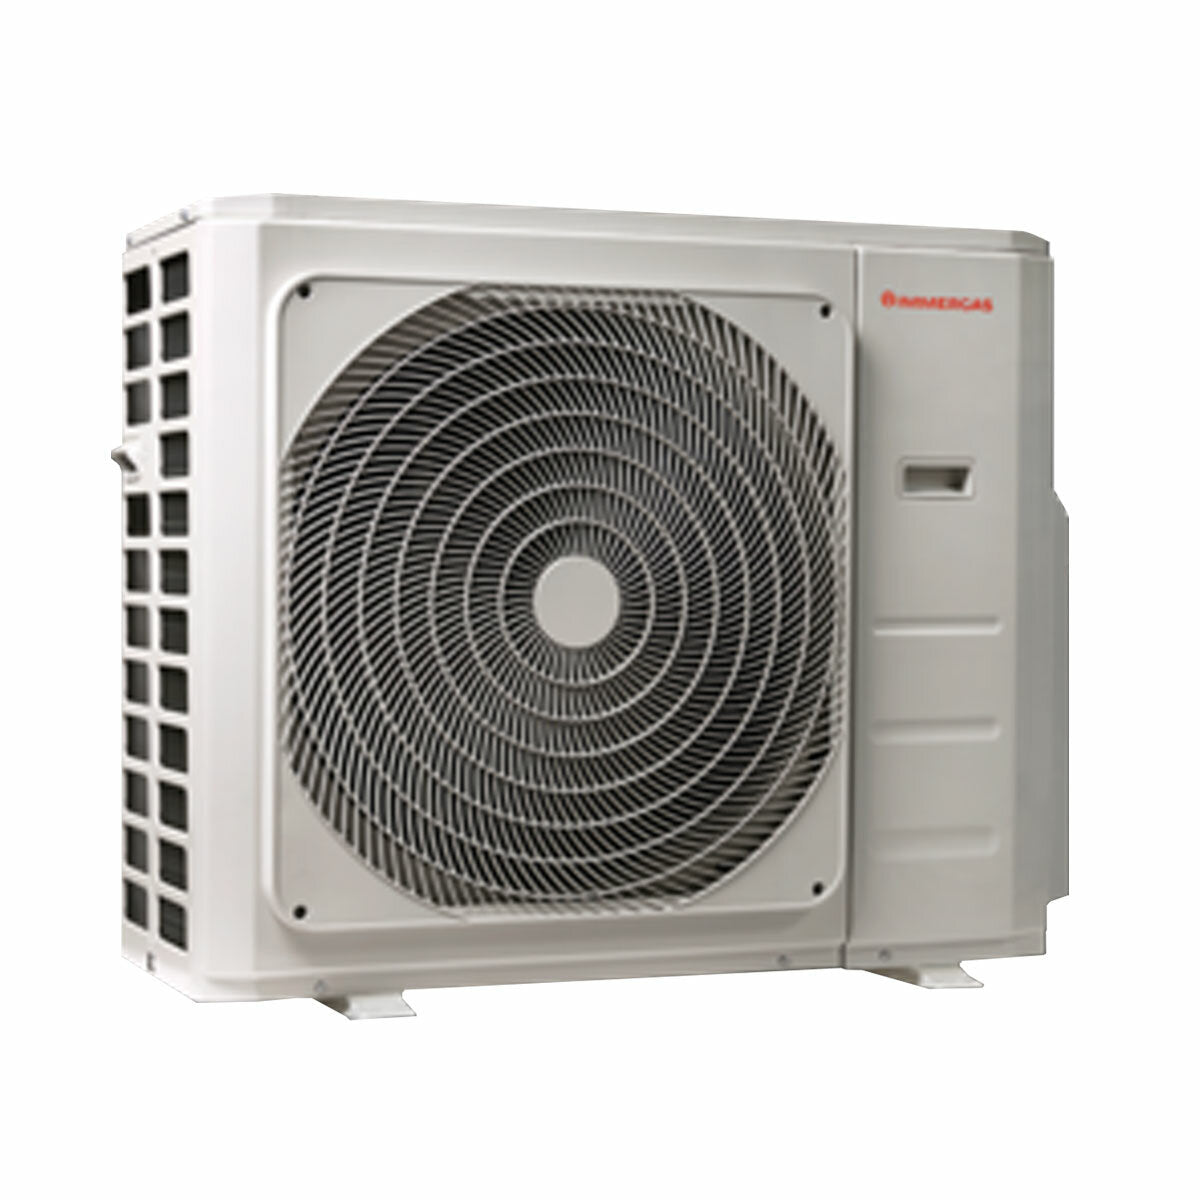 Immergas THOR trial split air conditioner 9000+9000+12000 BTU inverter A++ external unit 7.9 kW